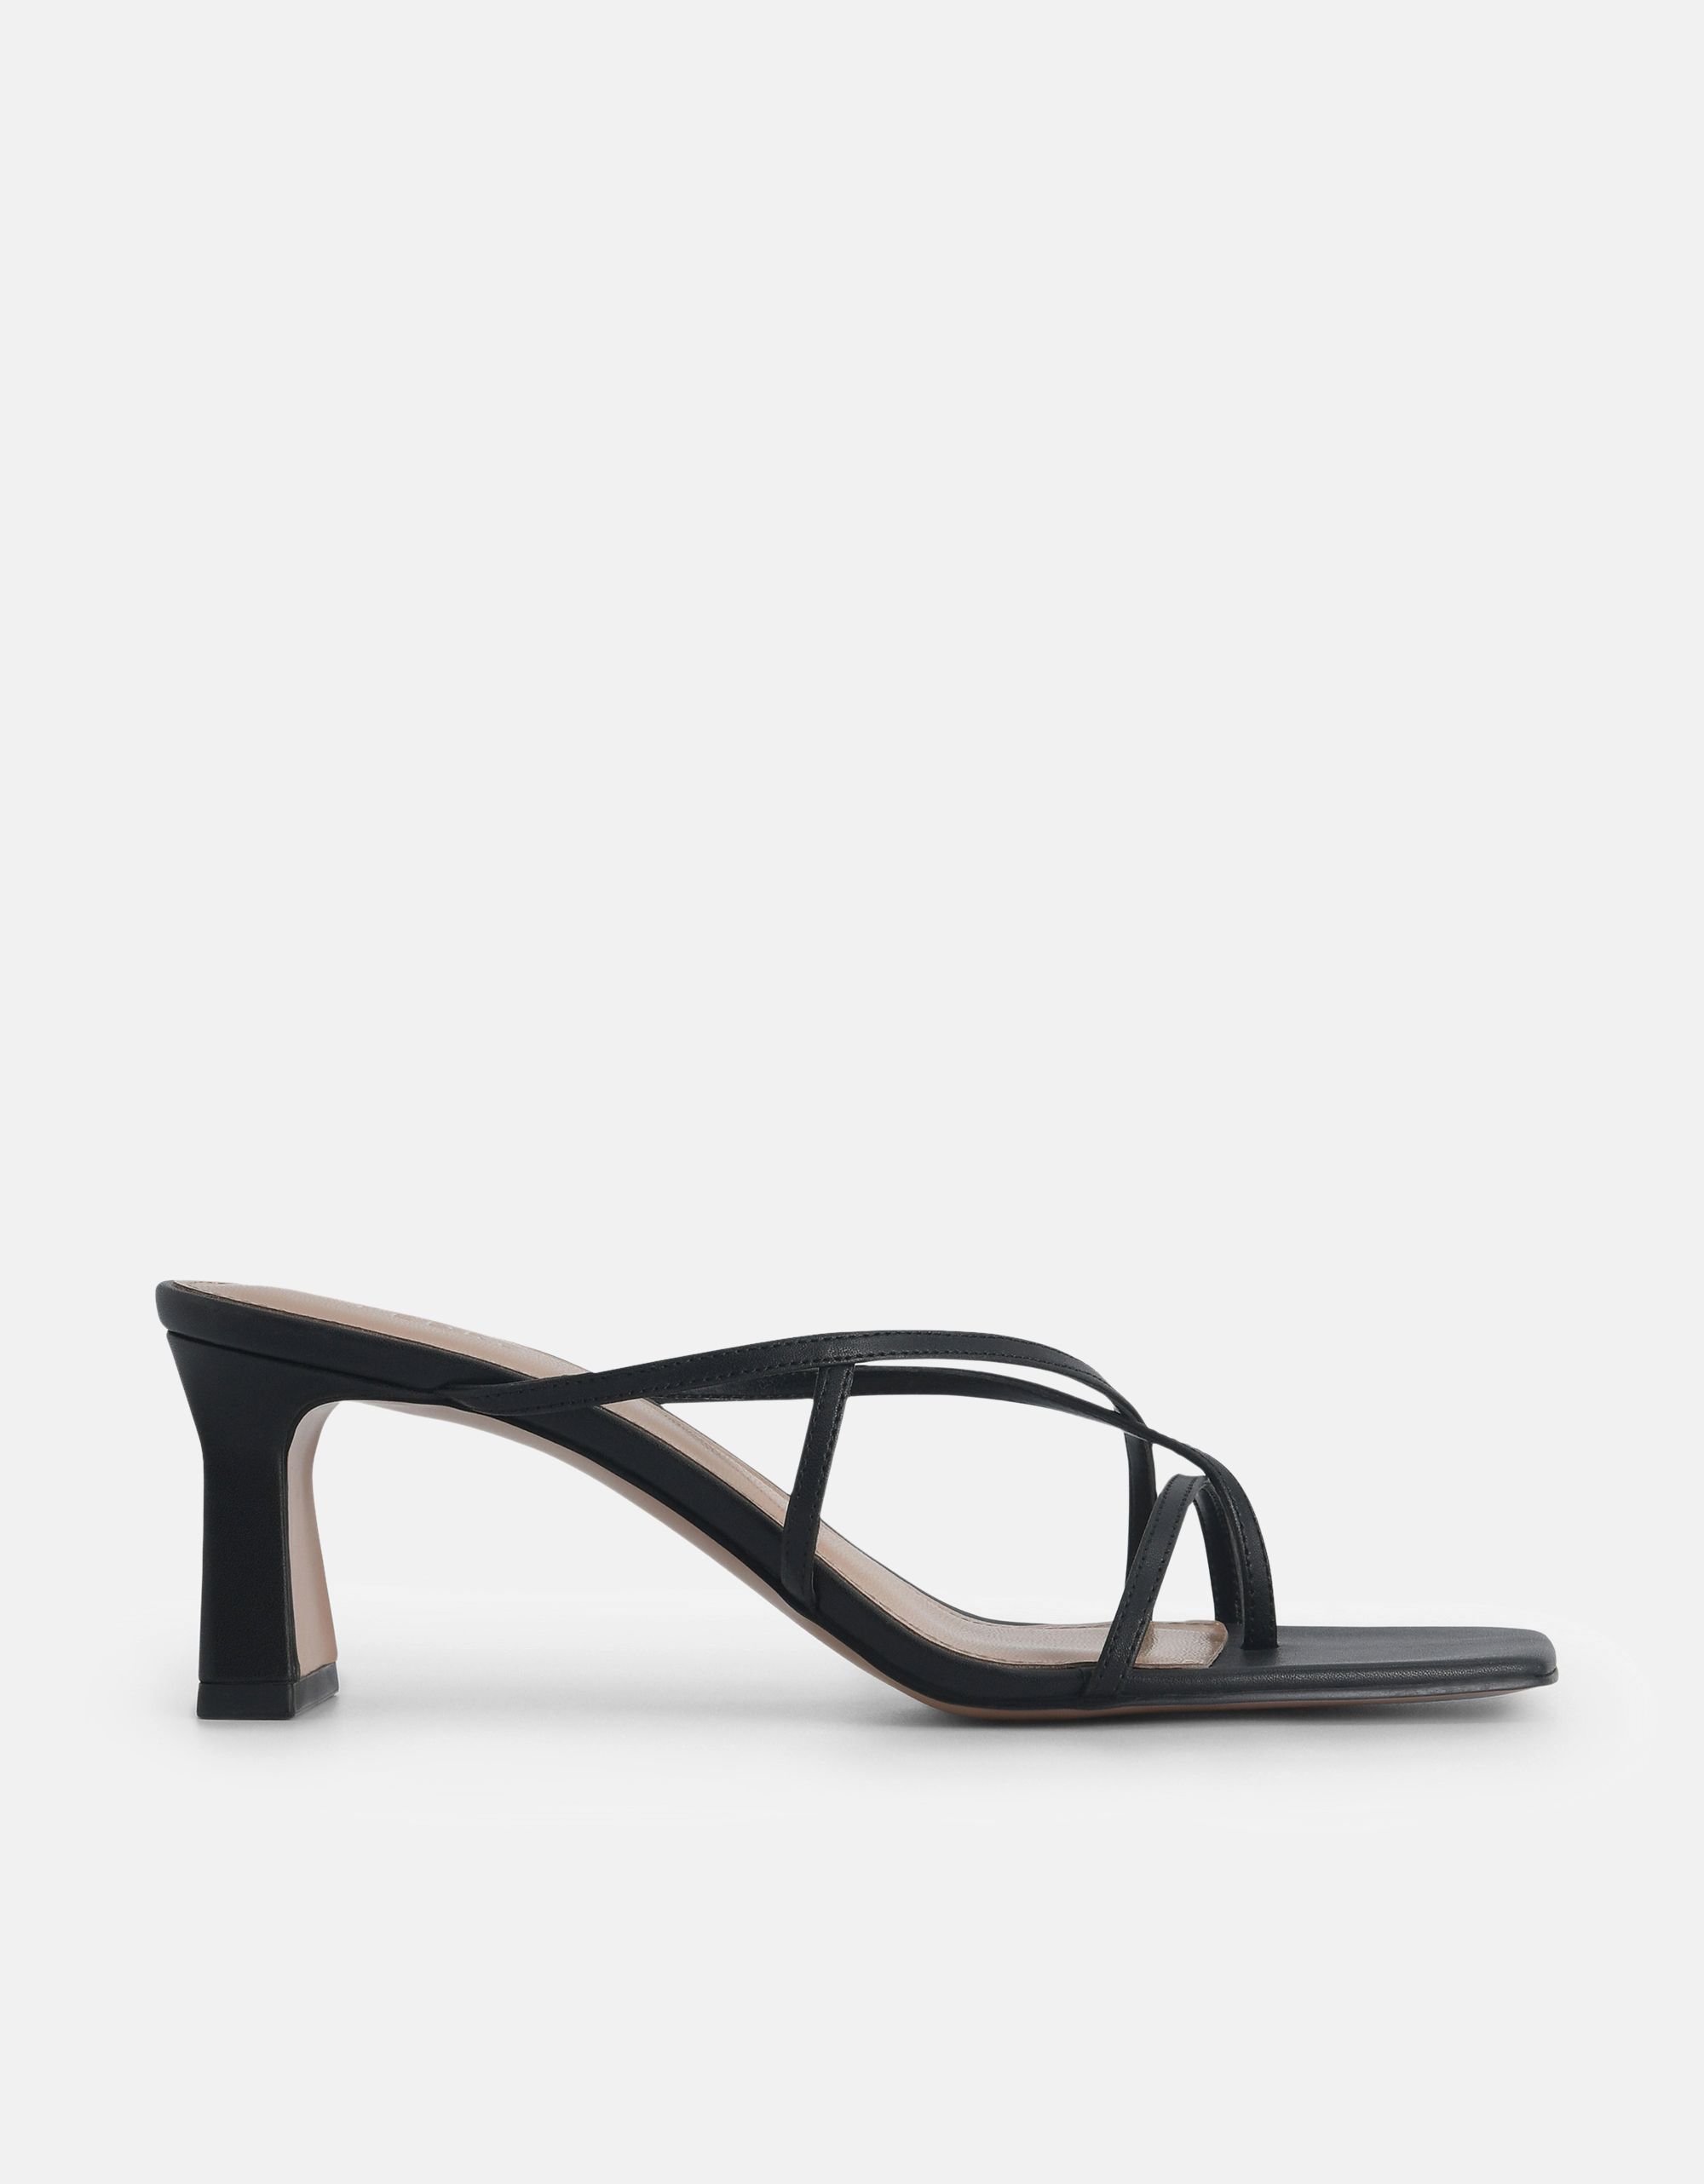 Strappy Toe Loop Heel Sandals
-
Black | Pedro Shoes